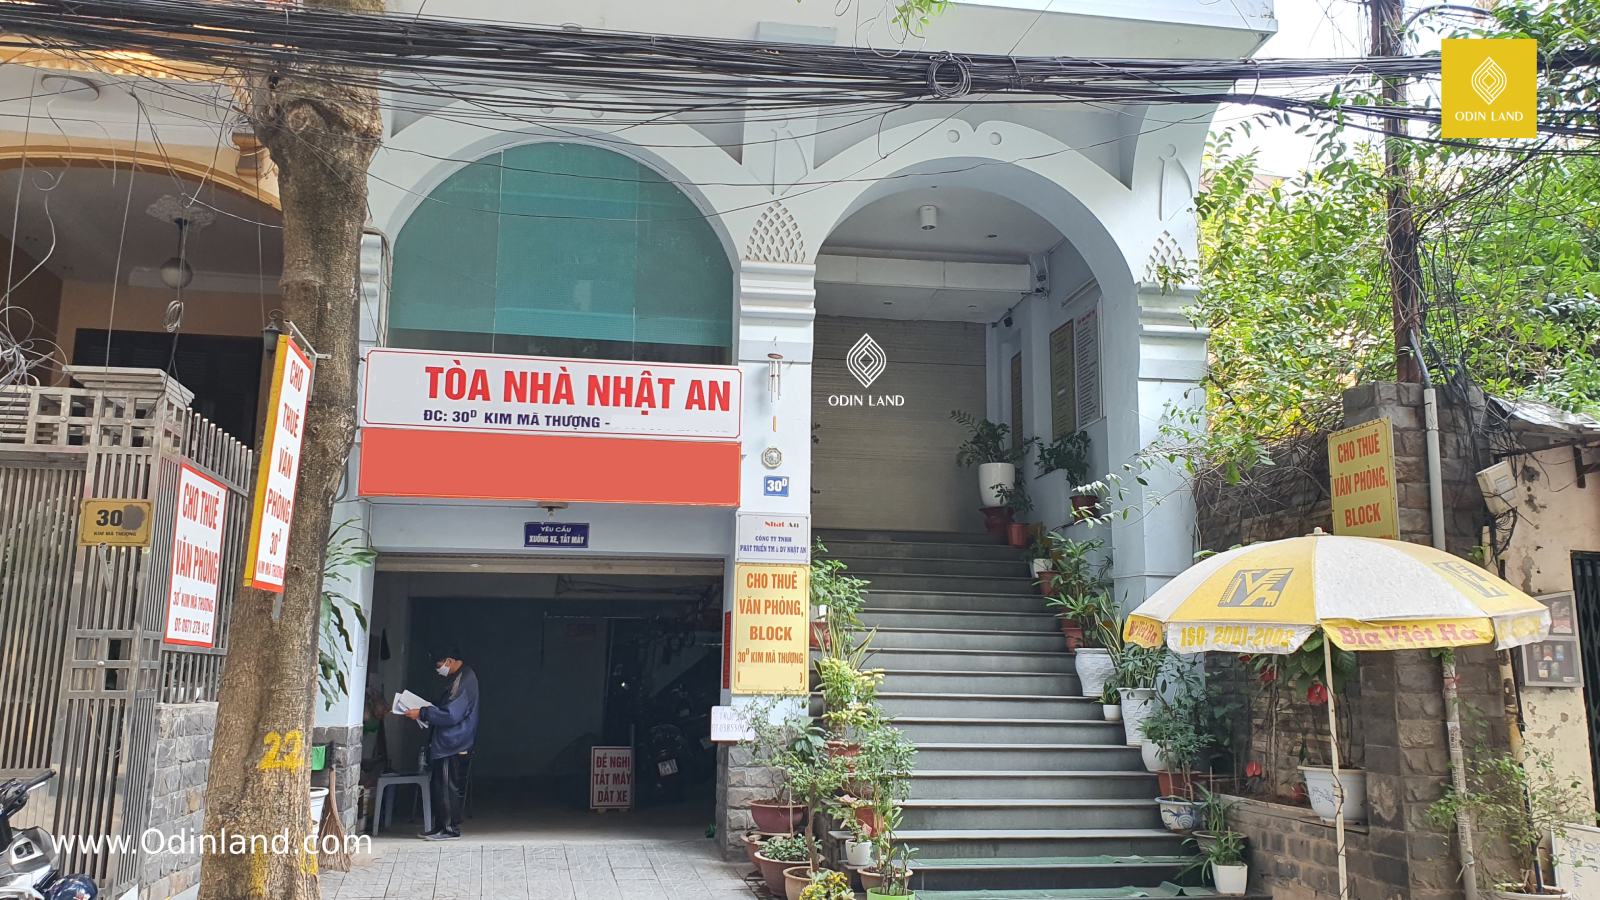 Van Phong Cho Thue Toa Nha Nhat An Building 4